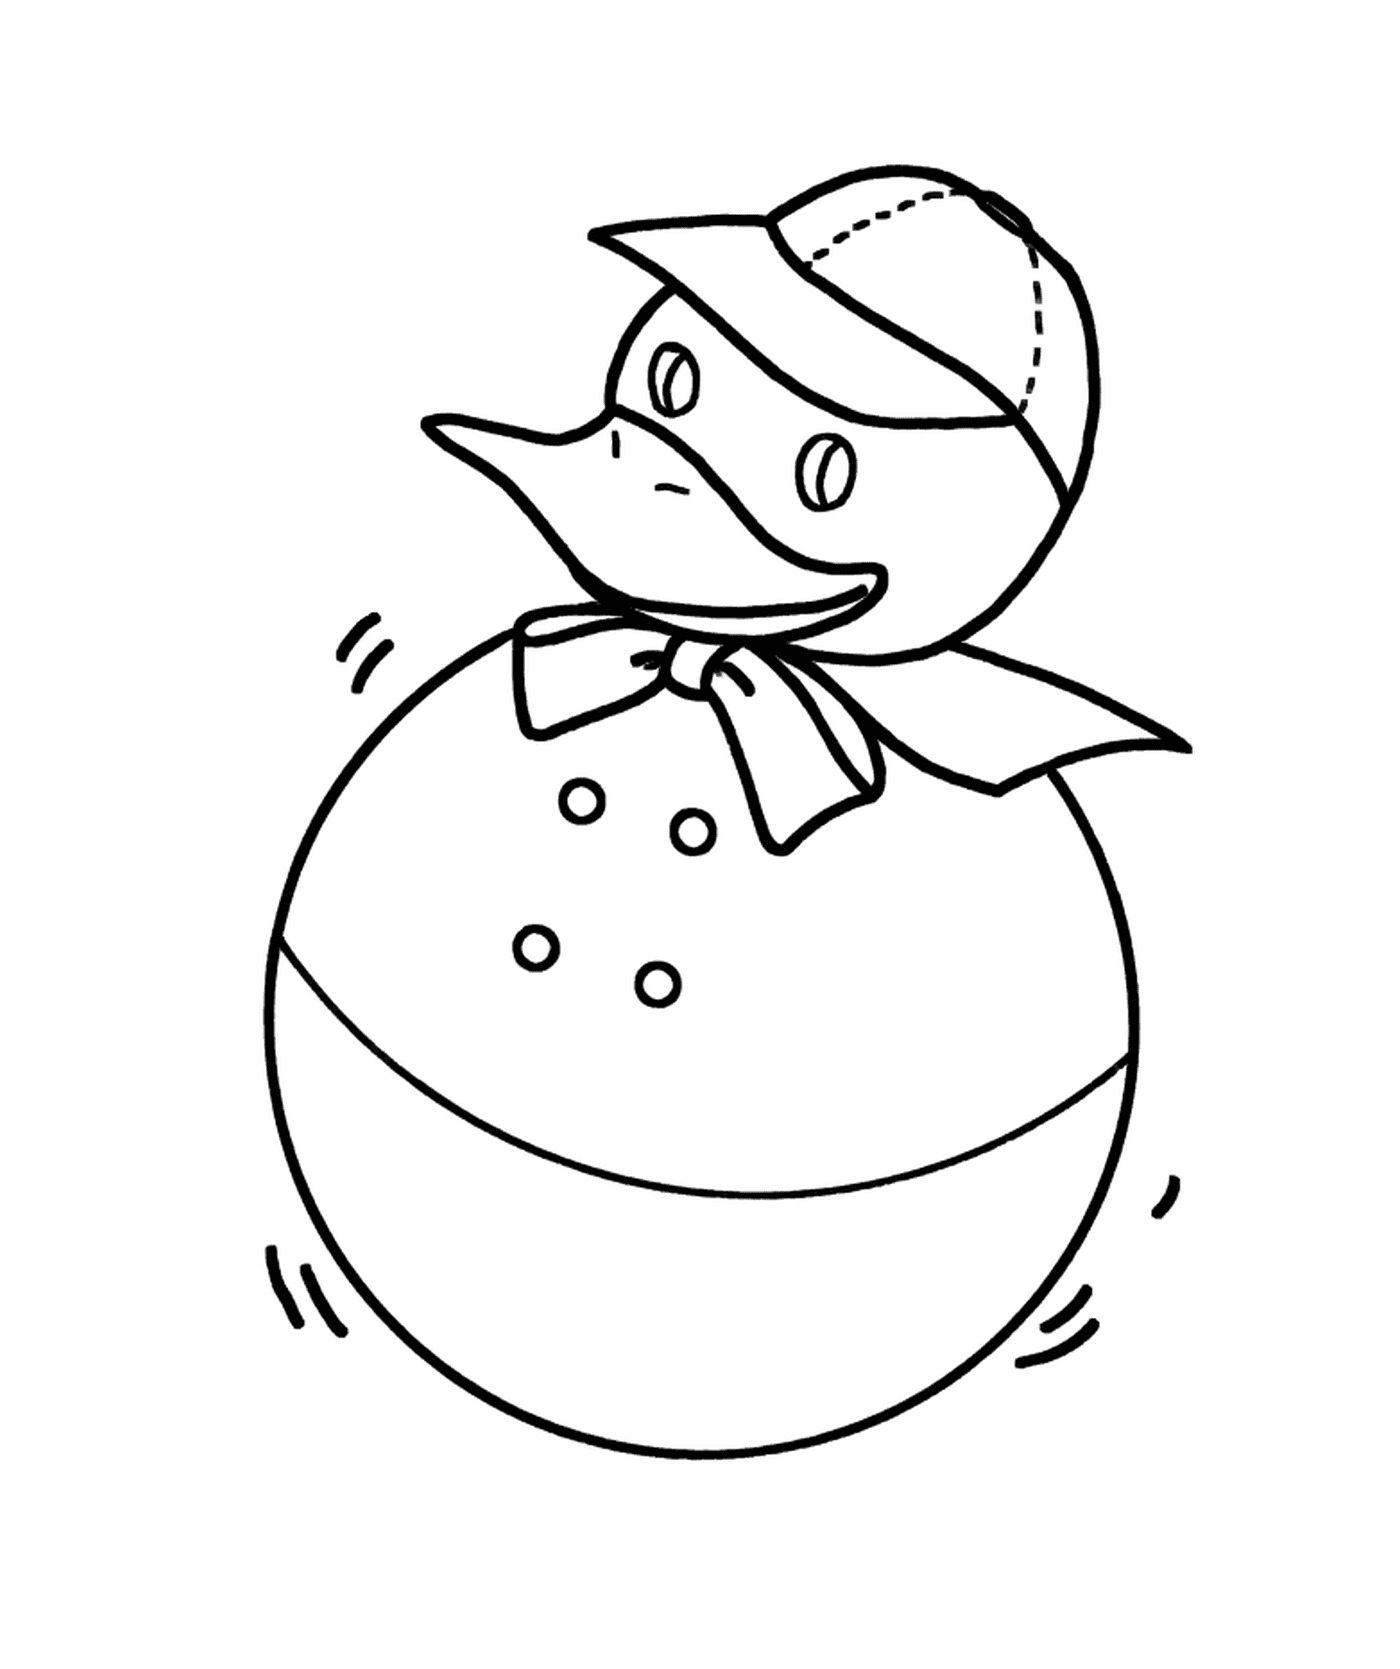  A rubber duck wearing a hat 